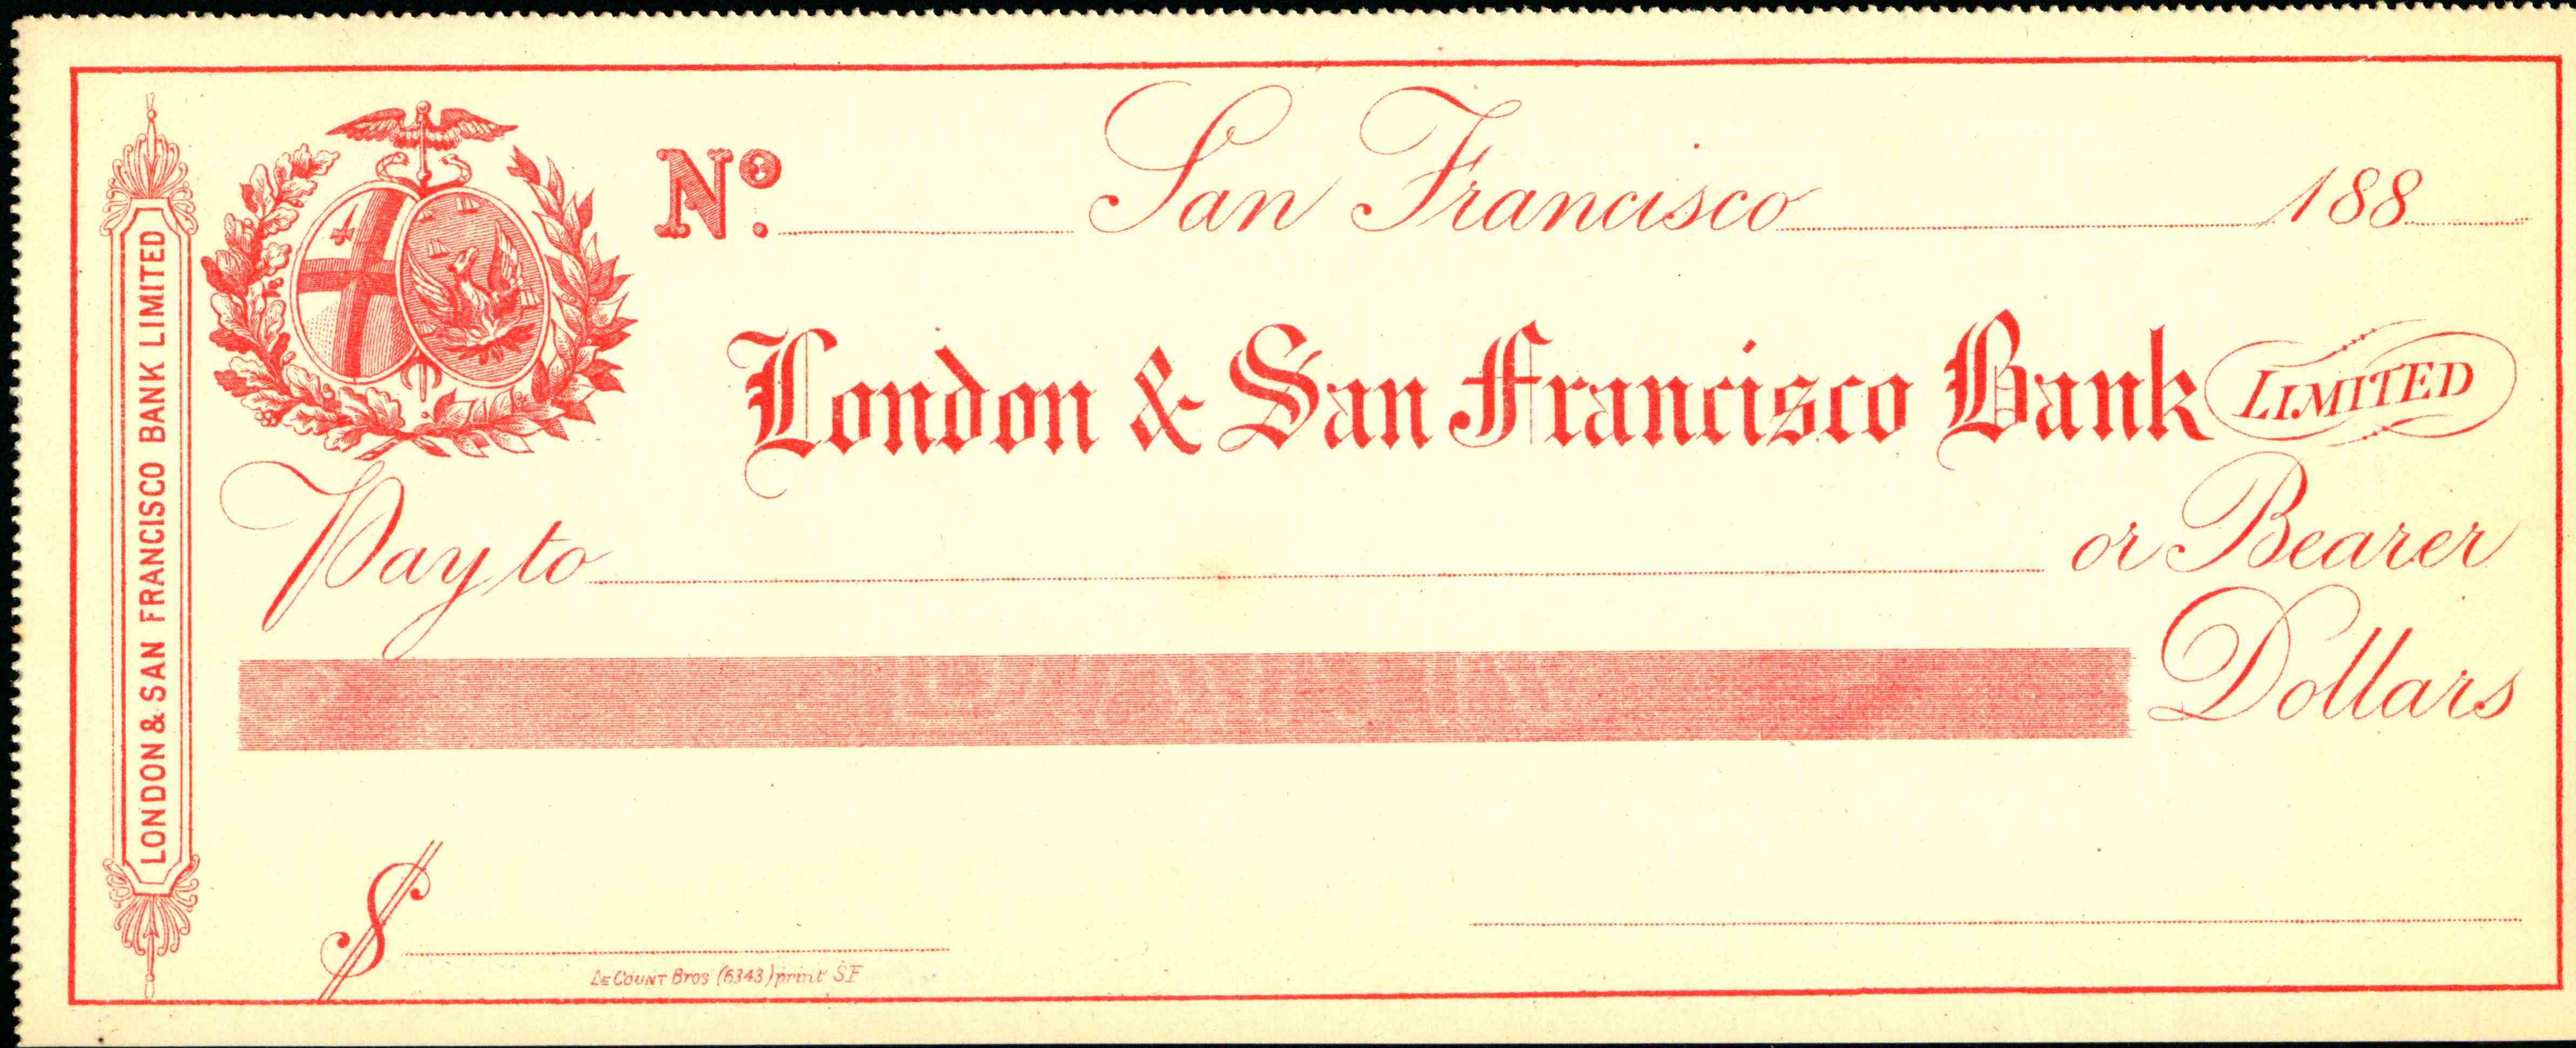 Left hand side London & San Francisco Bank Limited